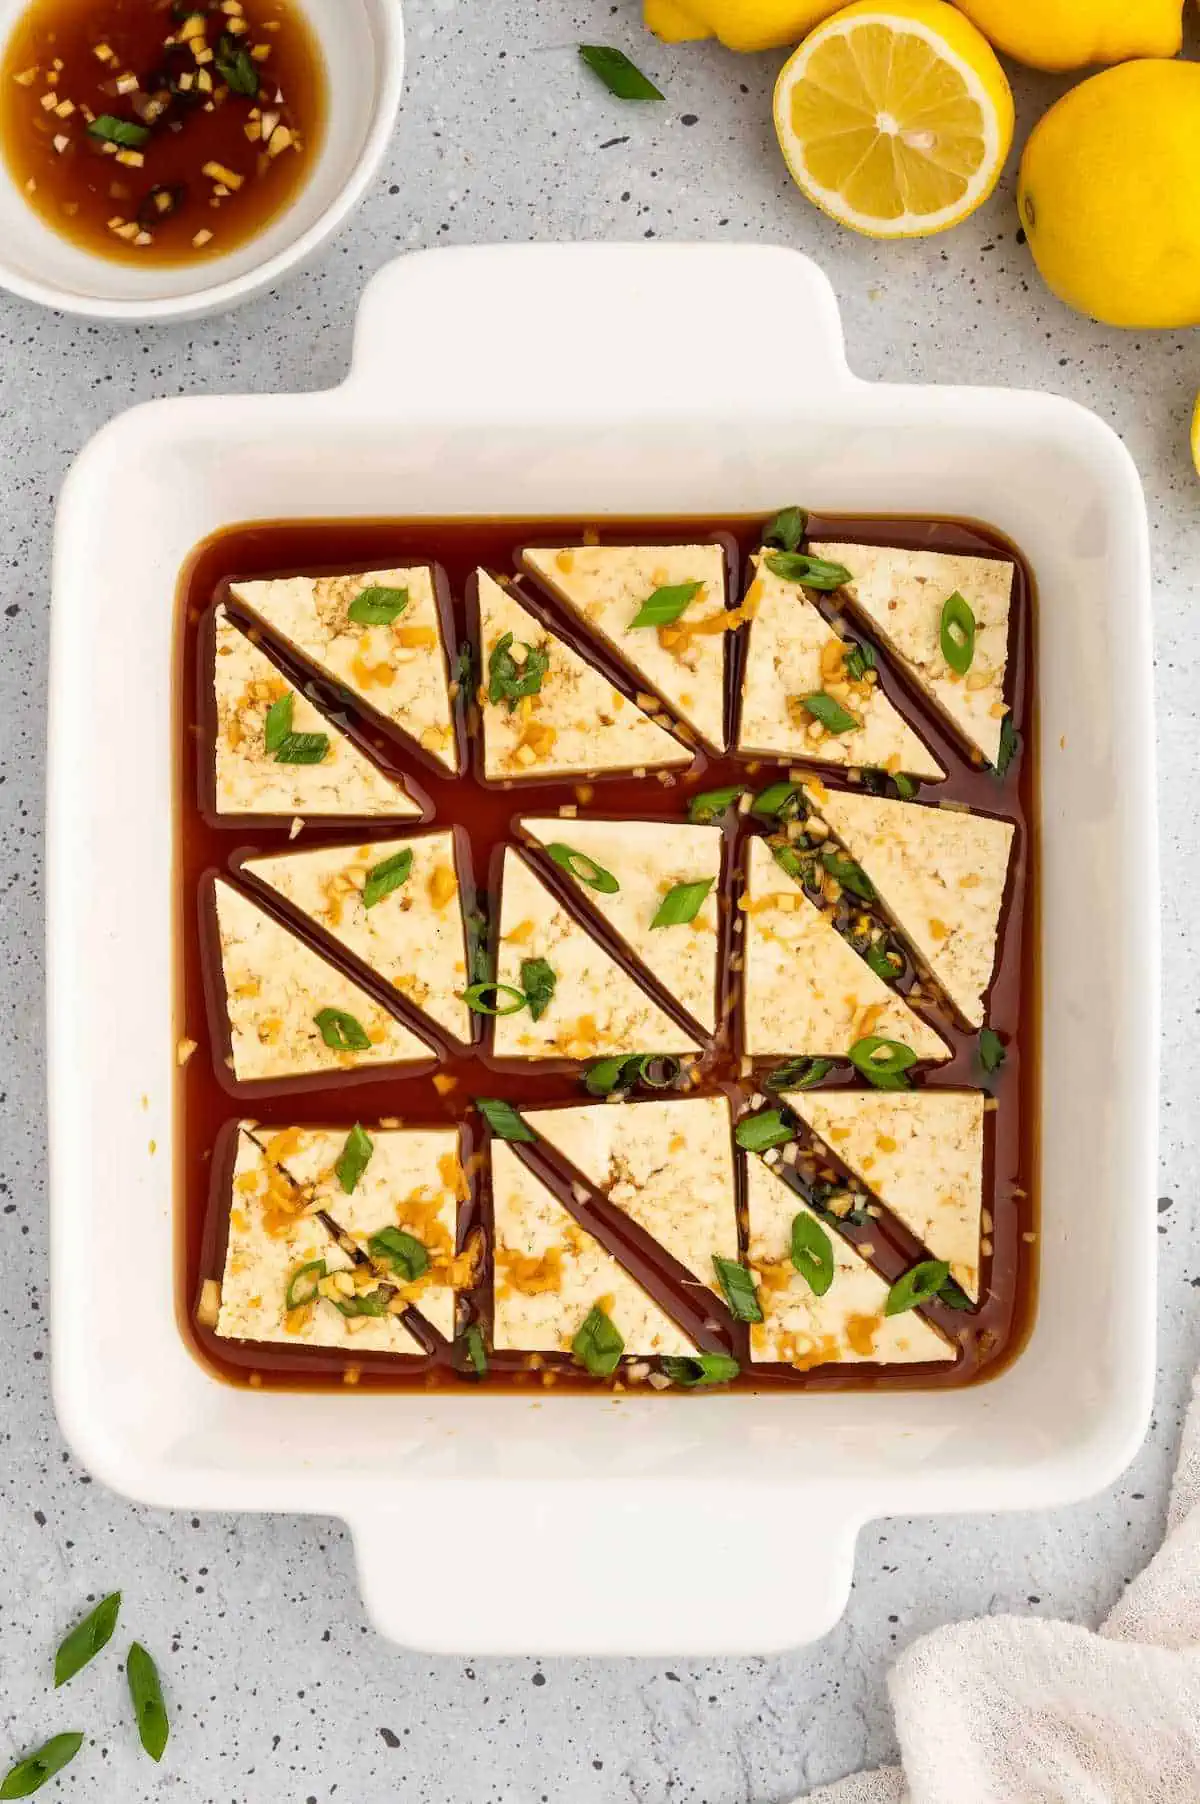 Tofu triangles marinating in asian tofu marinade.